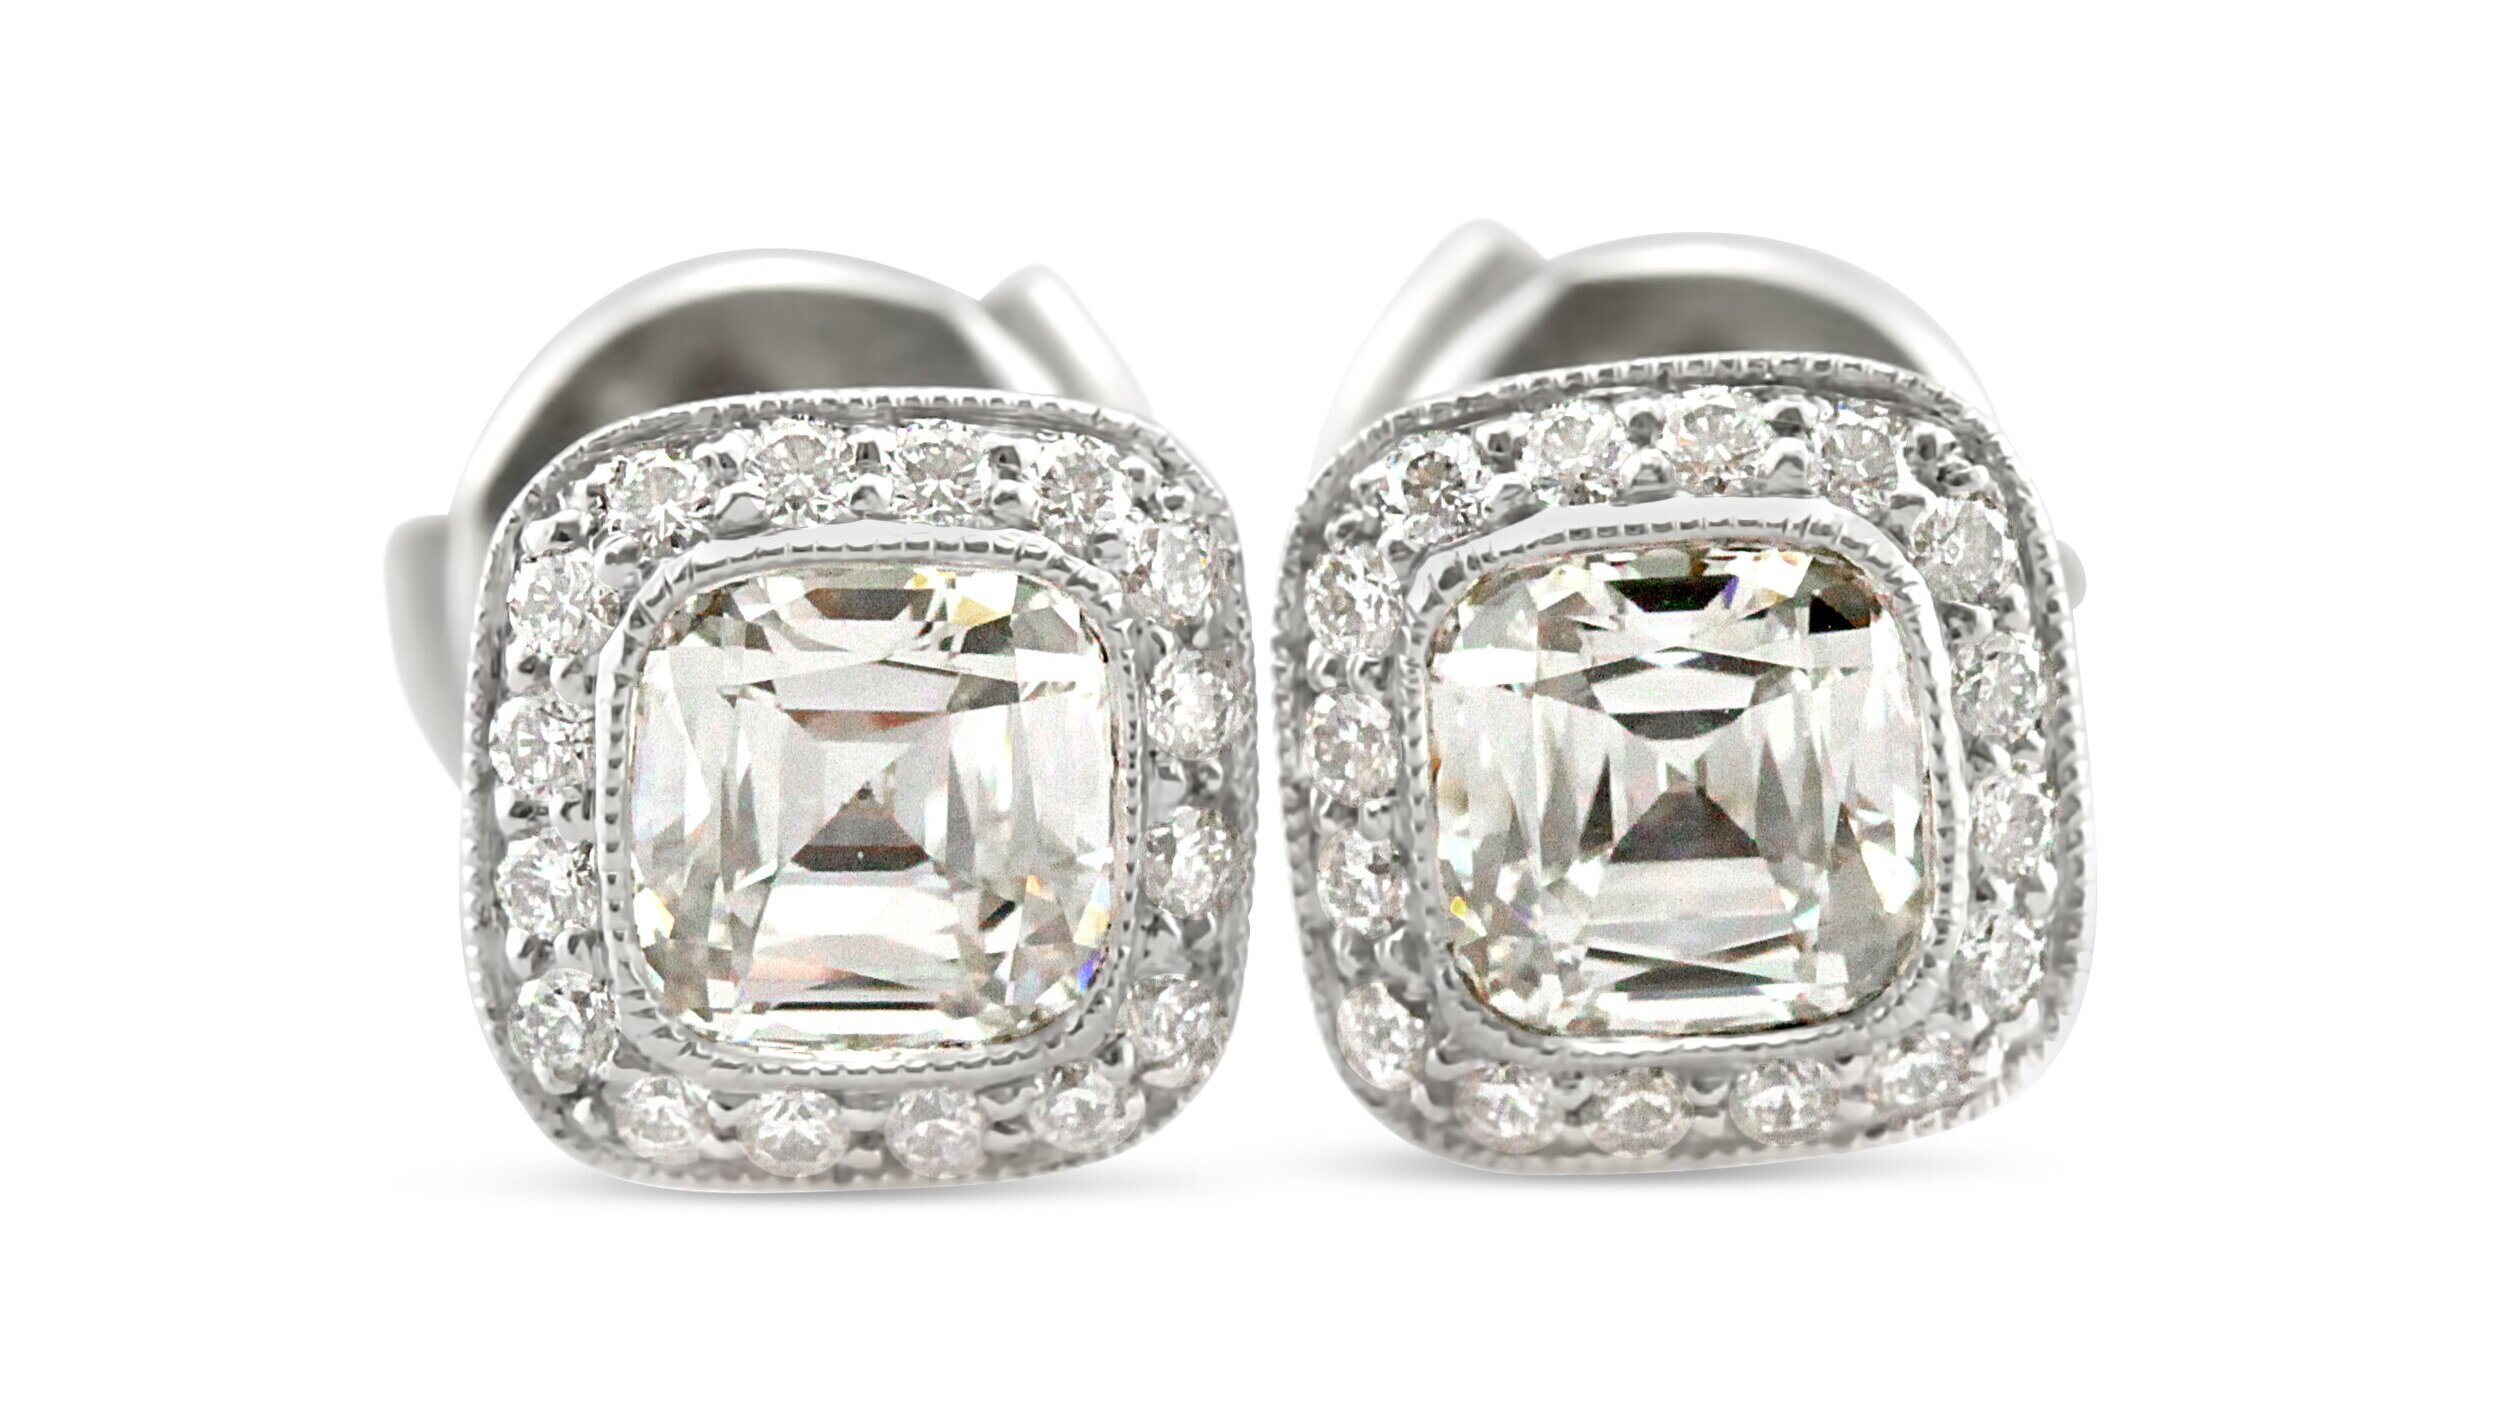 Diamond+and+Platinum+Earrings+by+Tiffany_5887.jpg